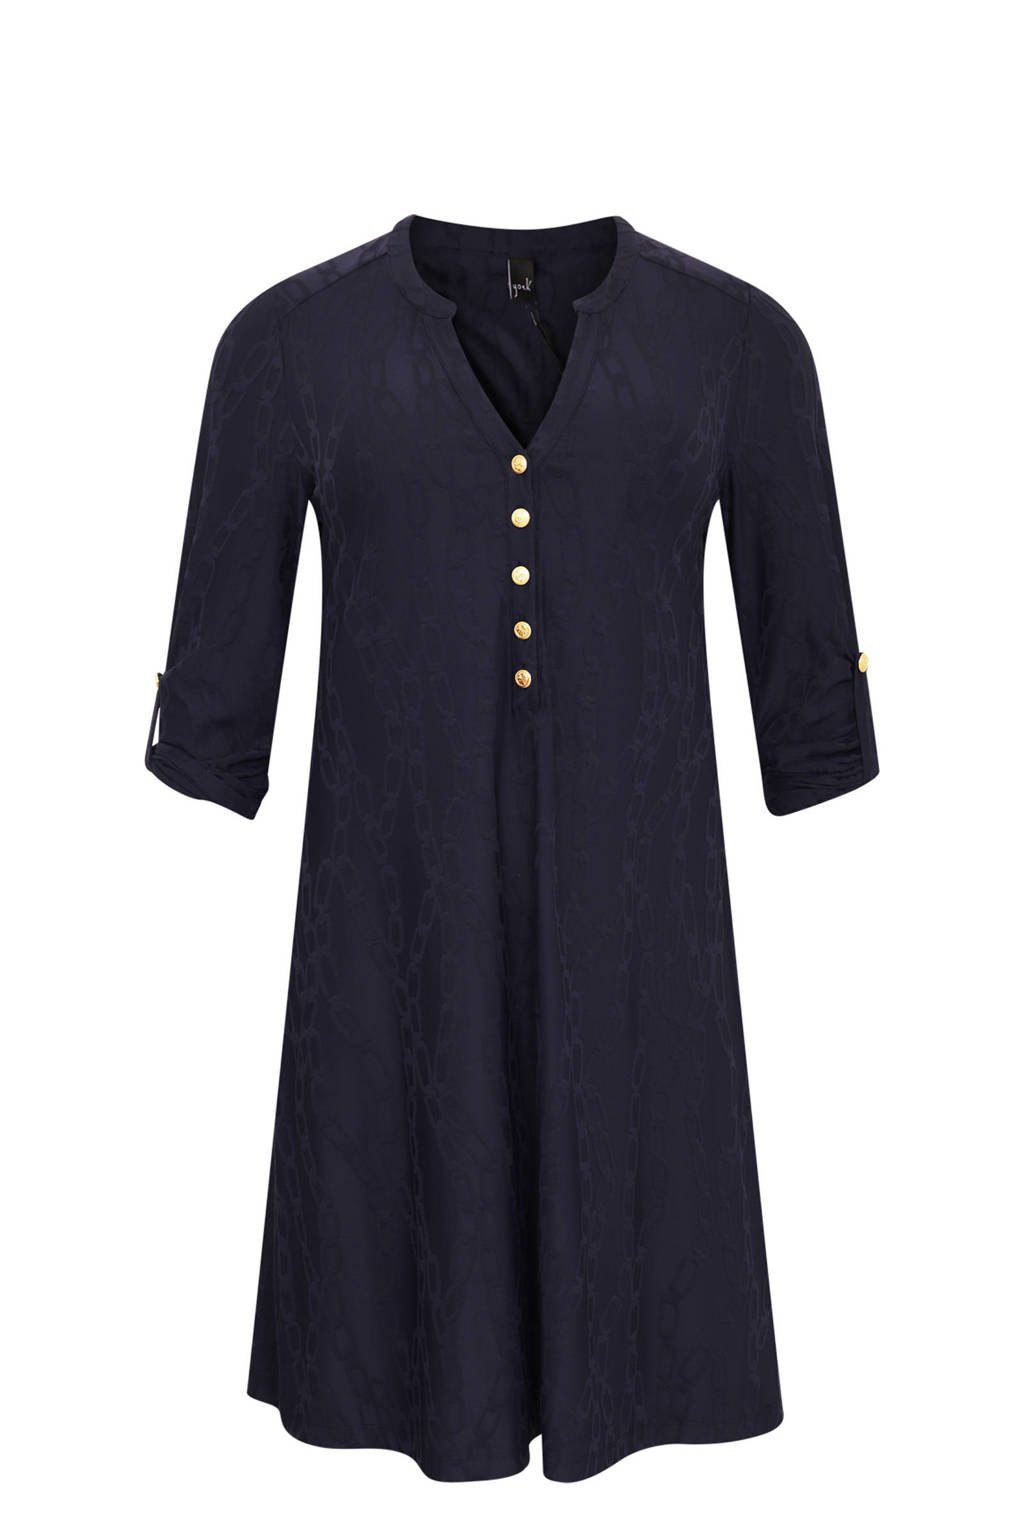 Yoek A-lijn jurk van travelstof met ingeweven ketting patroon CHAINS donkerblauw